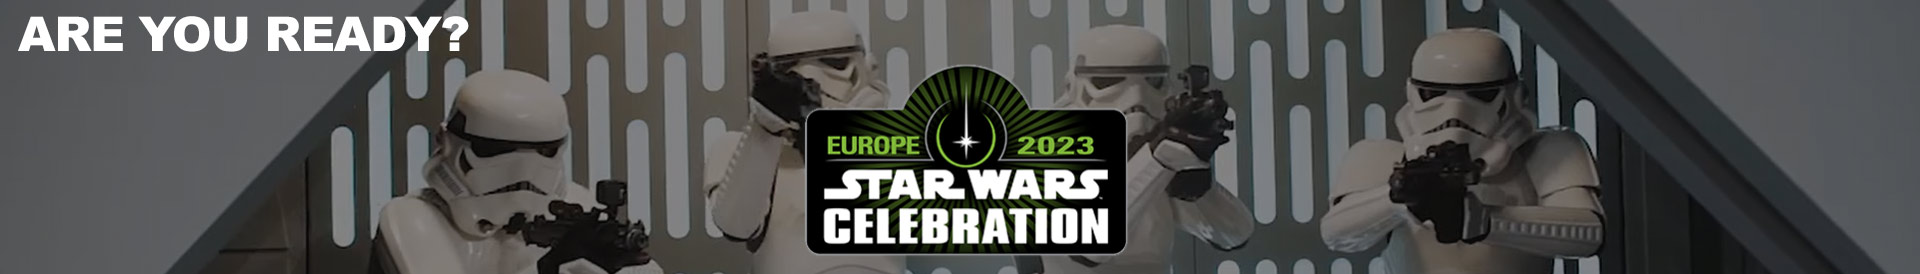 Get ready for Star Wars Celebration